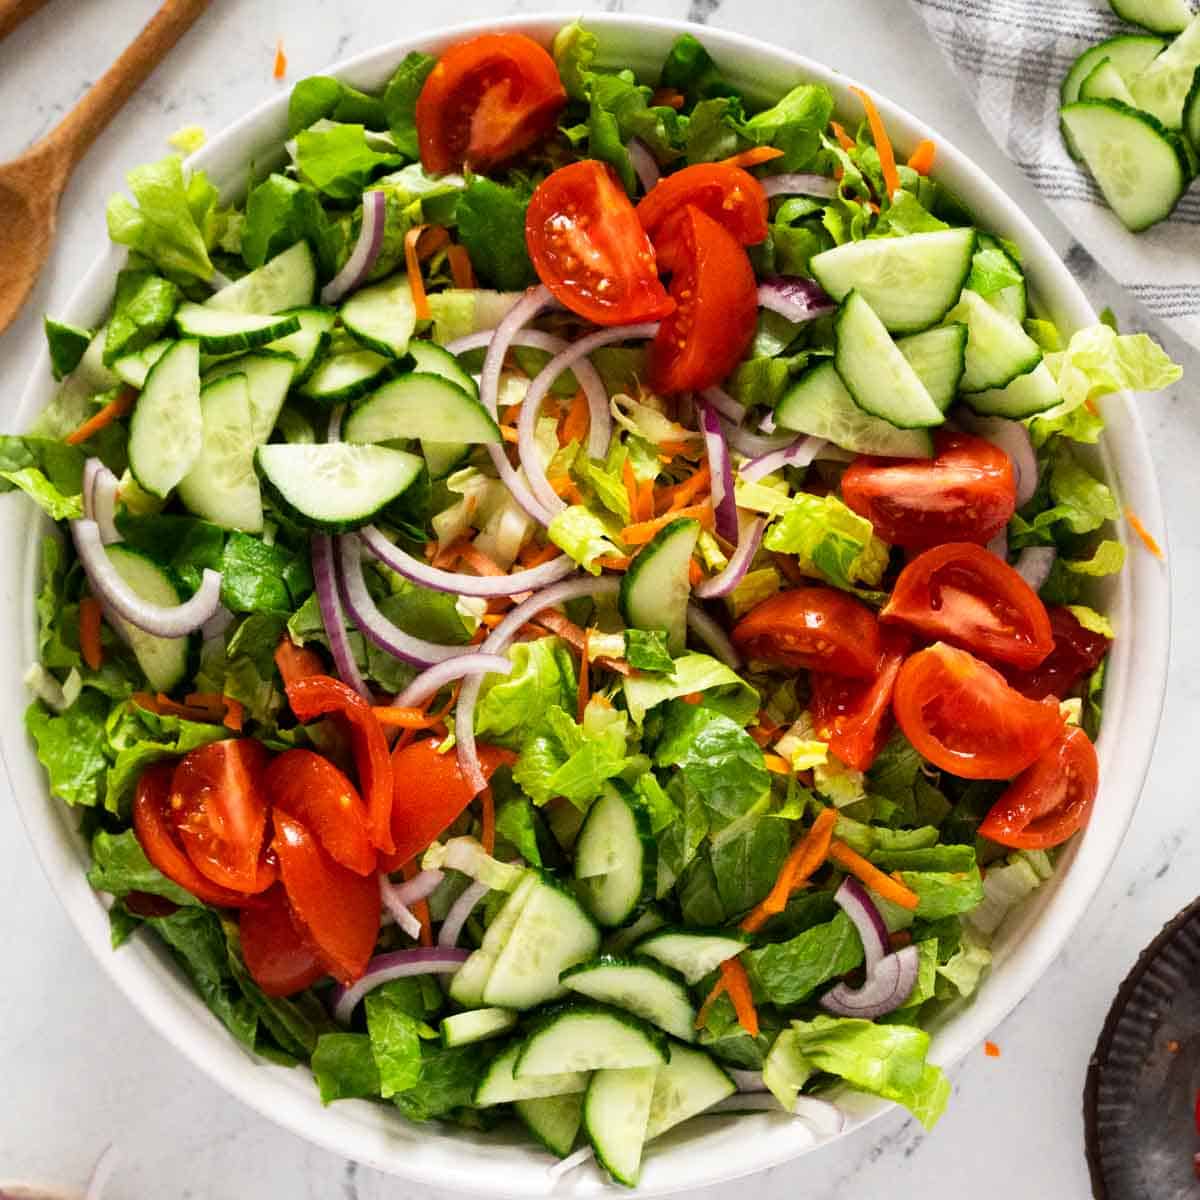 https://www.peelwithzeal.com/wp-content/uploads/2023/01/house-salad-recipe.jpg